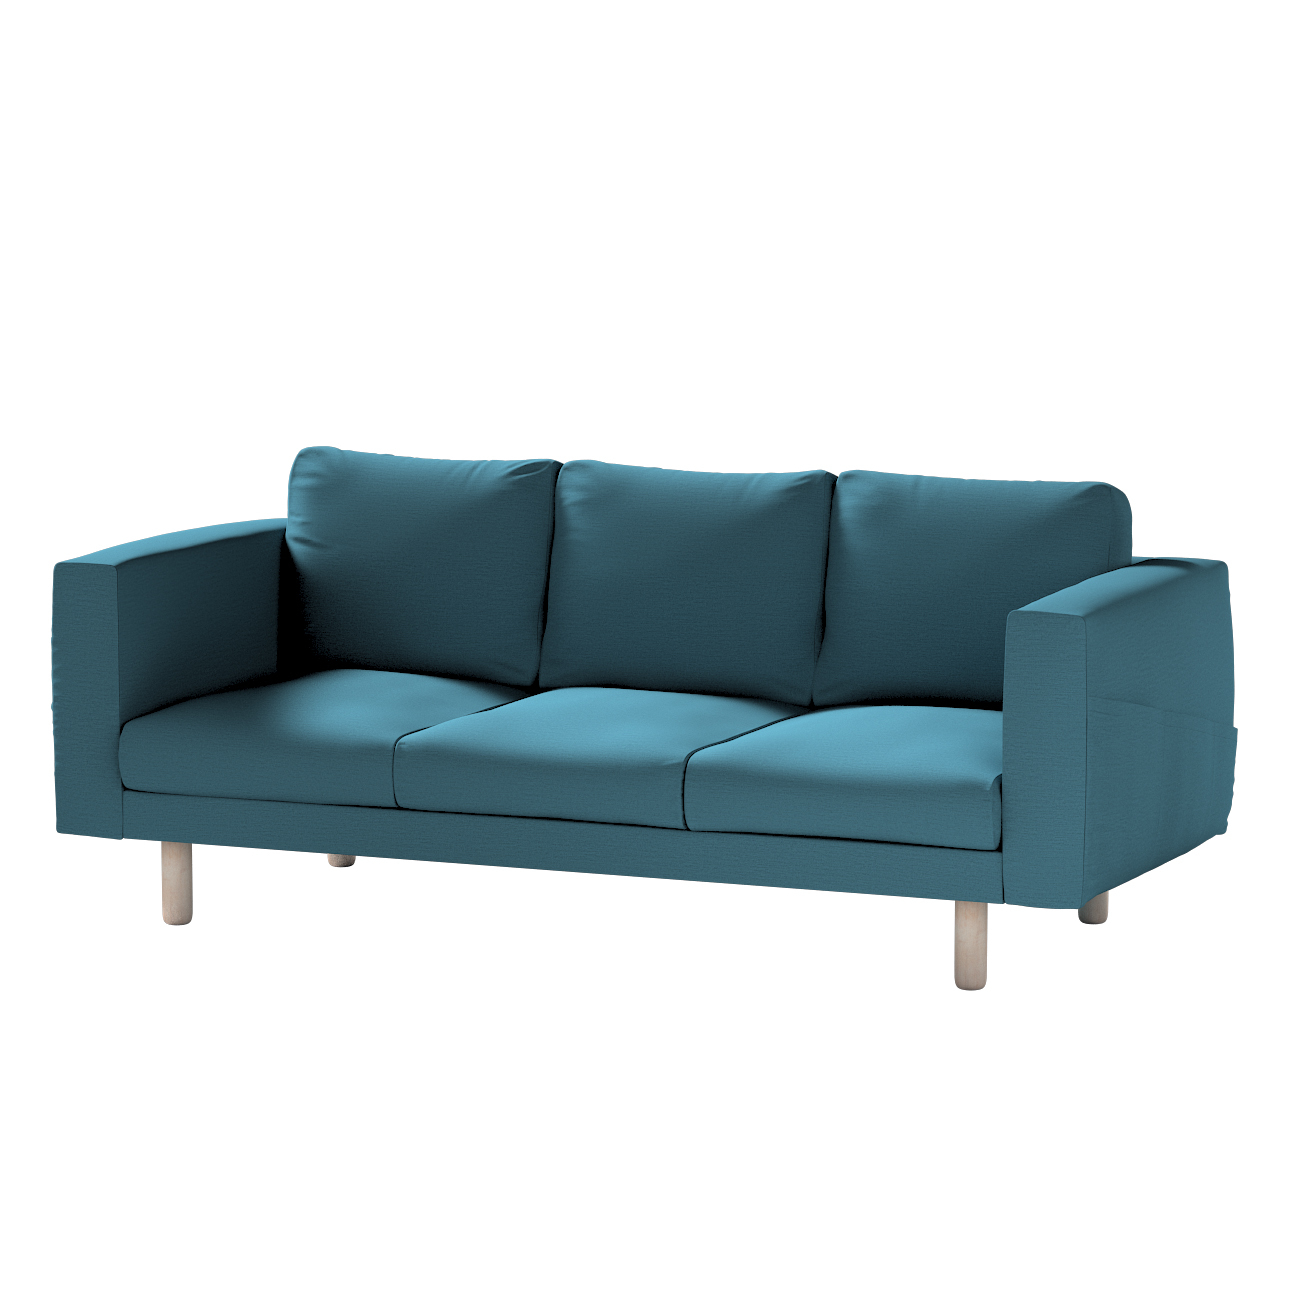 Bezug für Norsborg 3-Sitzer Sofa, dunkelblau, Norsborg 3-Sitzer Sofabezug, günstig online kaufen